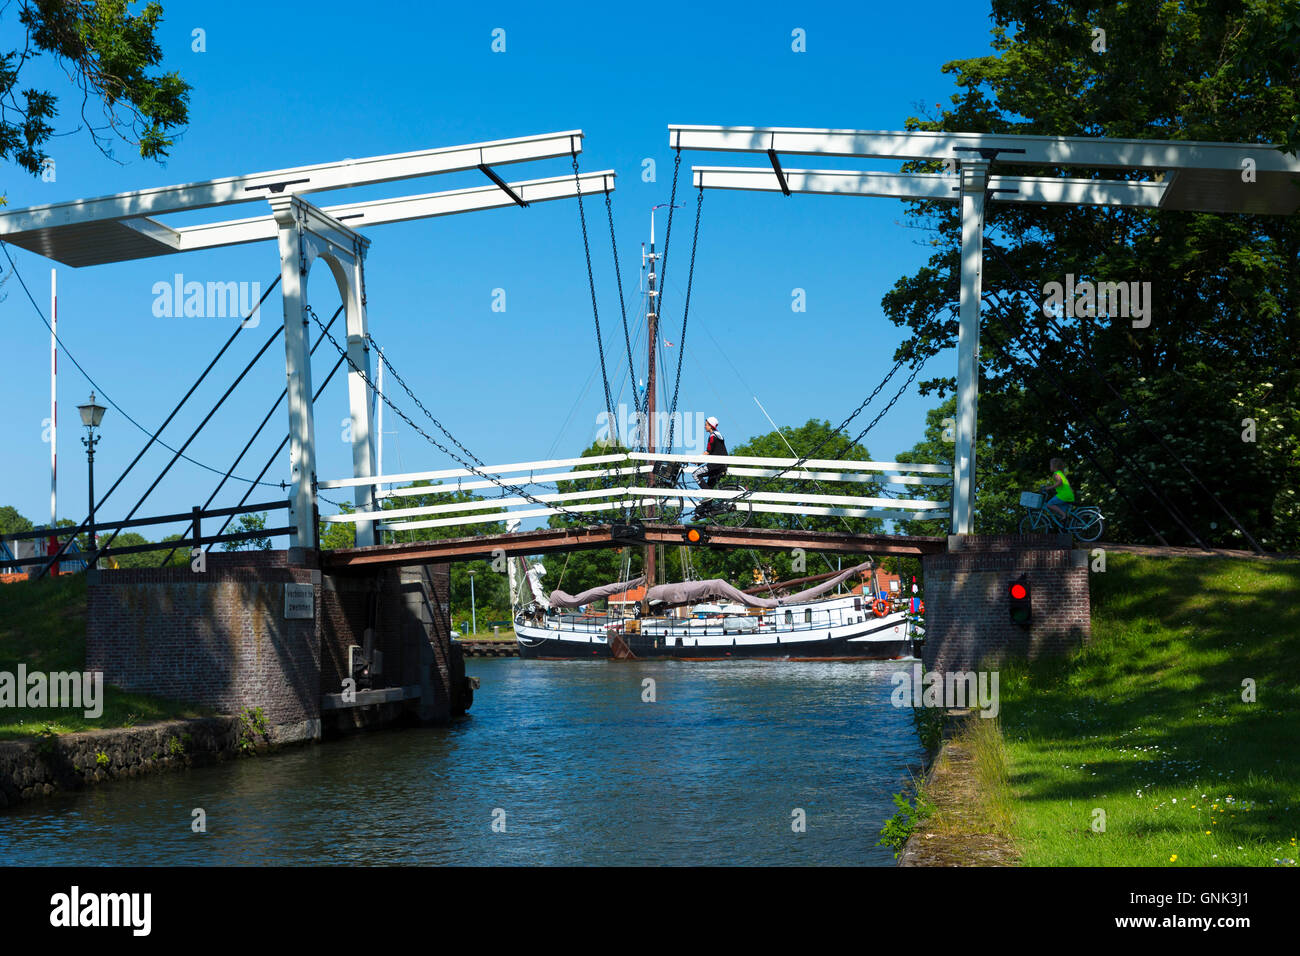 Bascule vertical-lift bridge, lift up drawbridge, across canal waterway at  Edam in The Netherlands Stock Photo